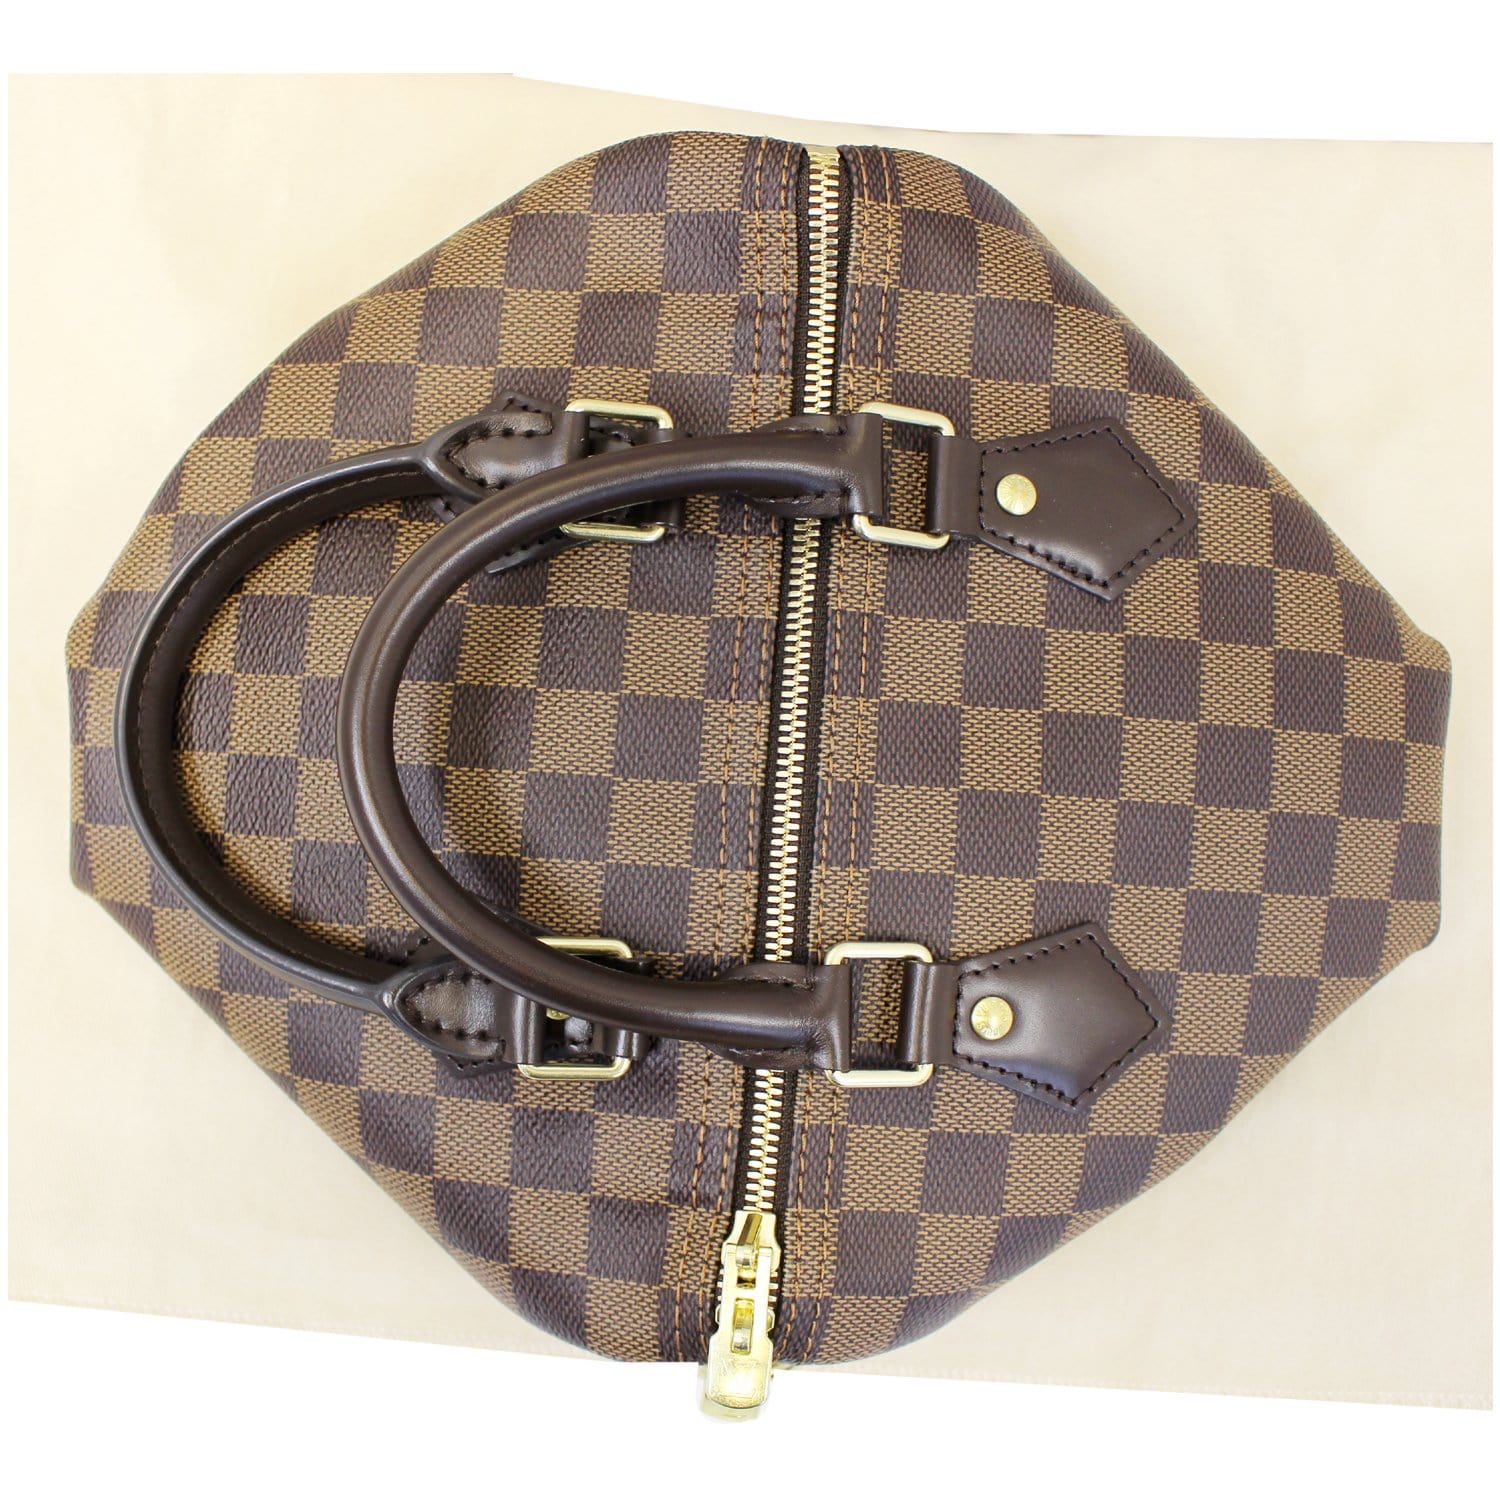 used Louis Vuitton Damier Ebene Speedy 25 Bandouliere Handbags